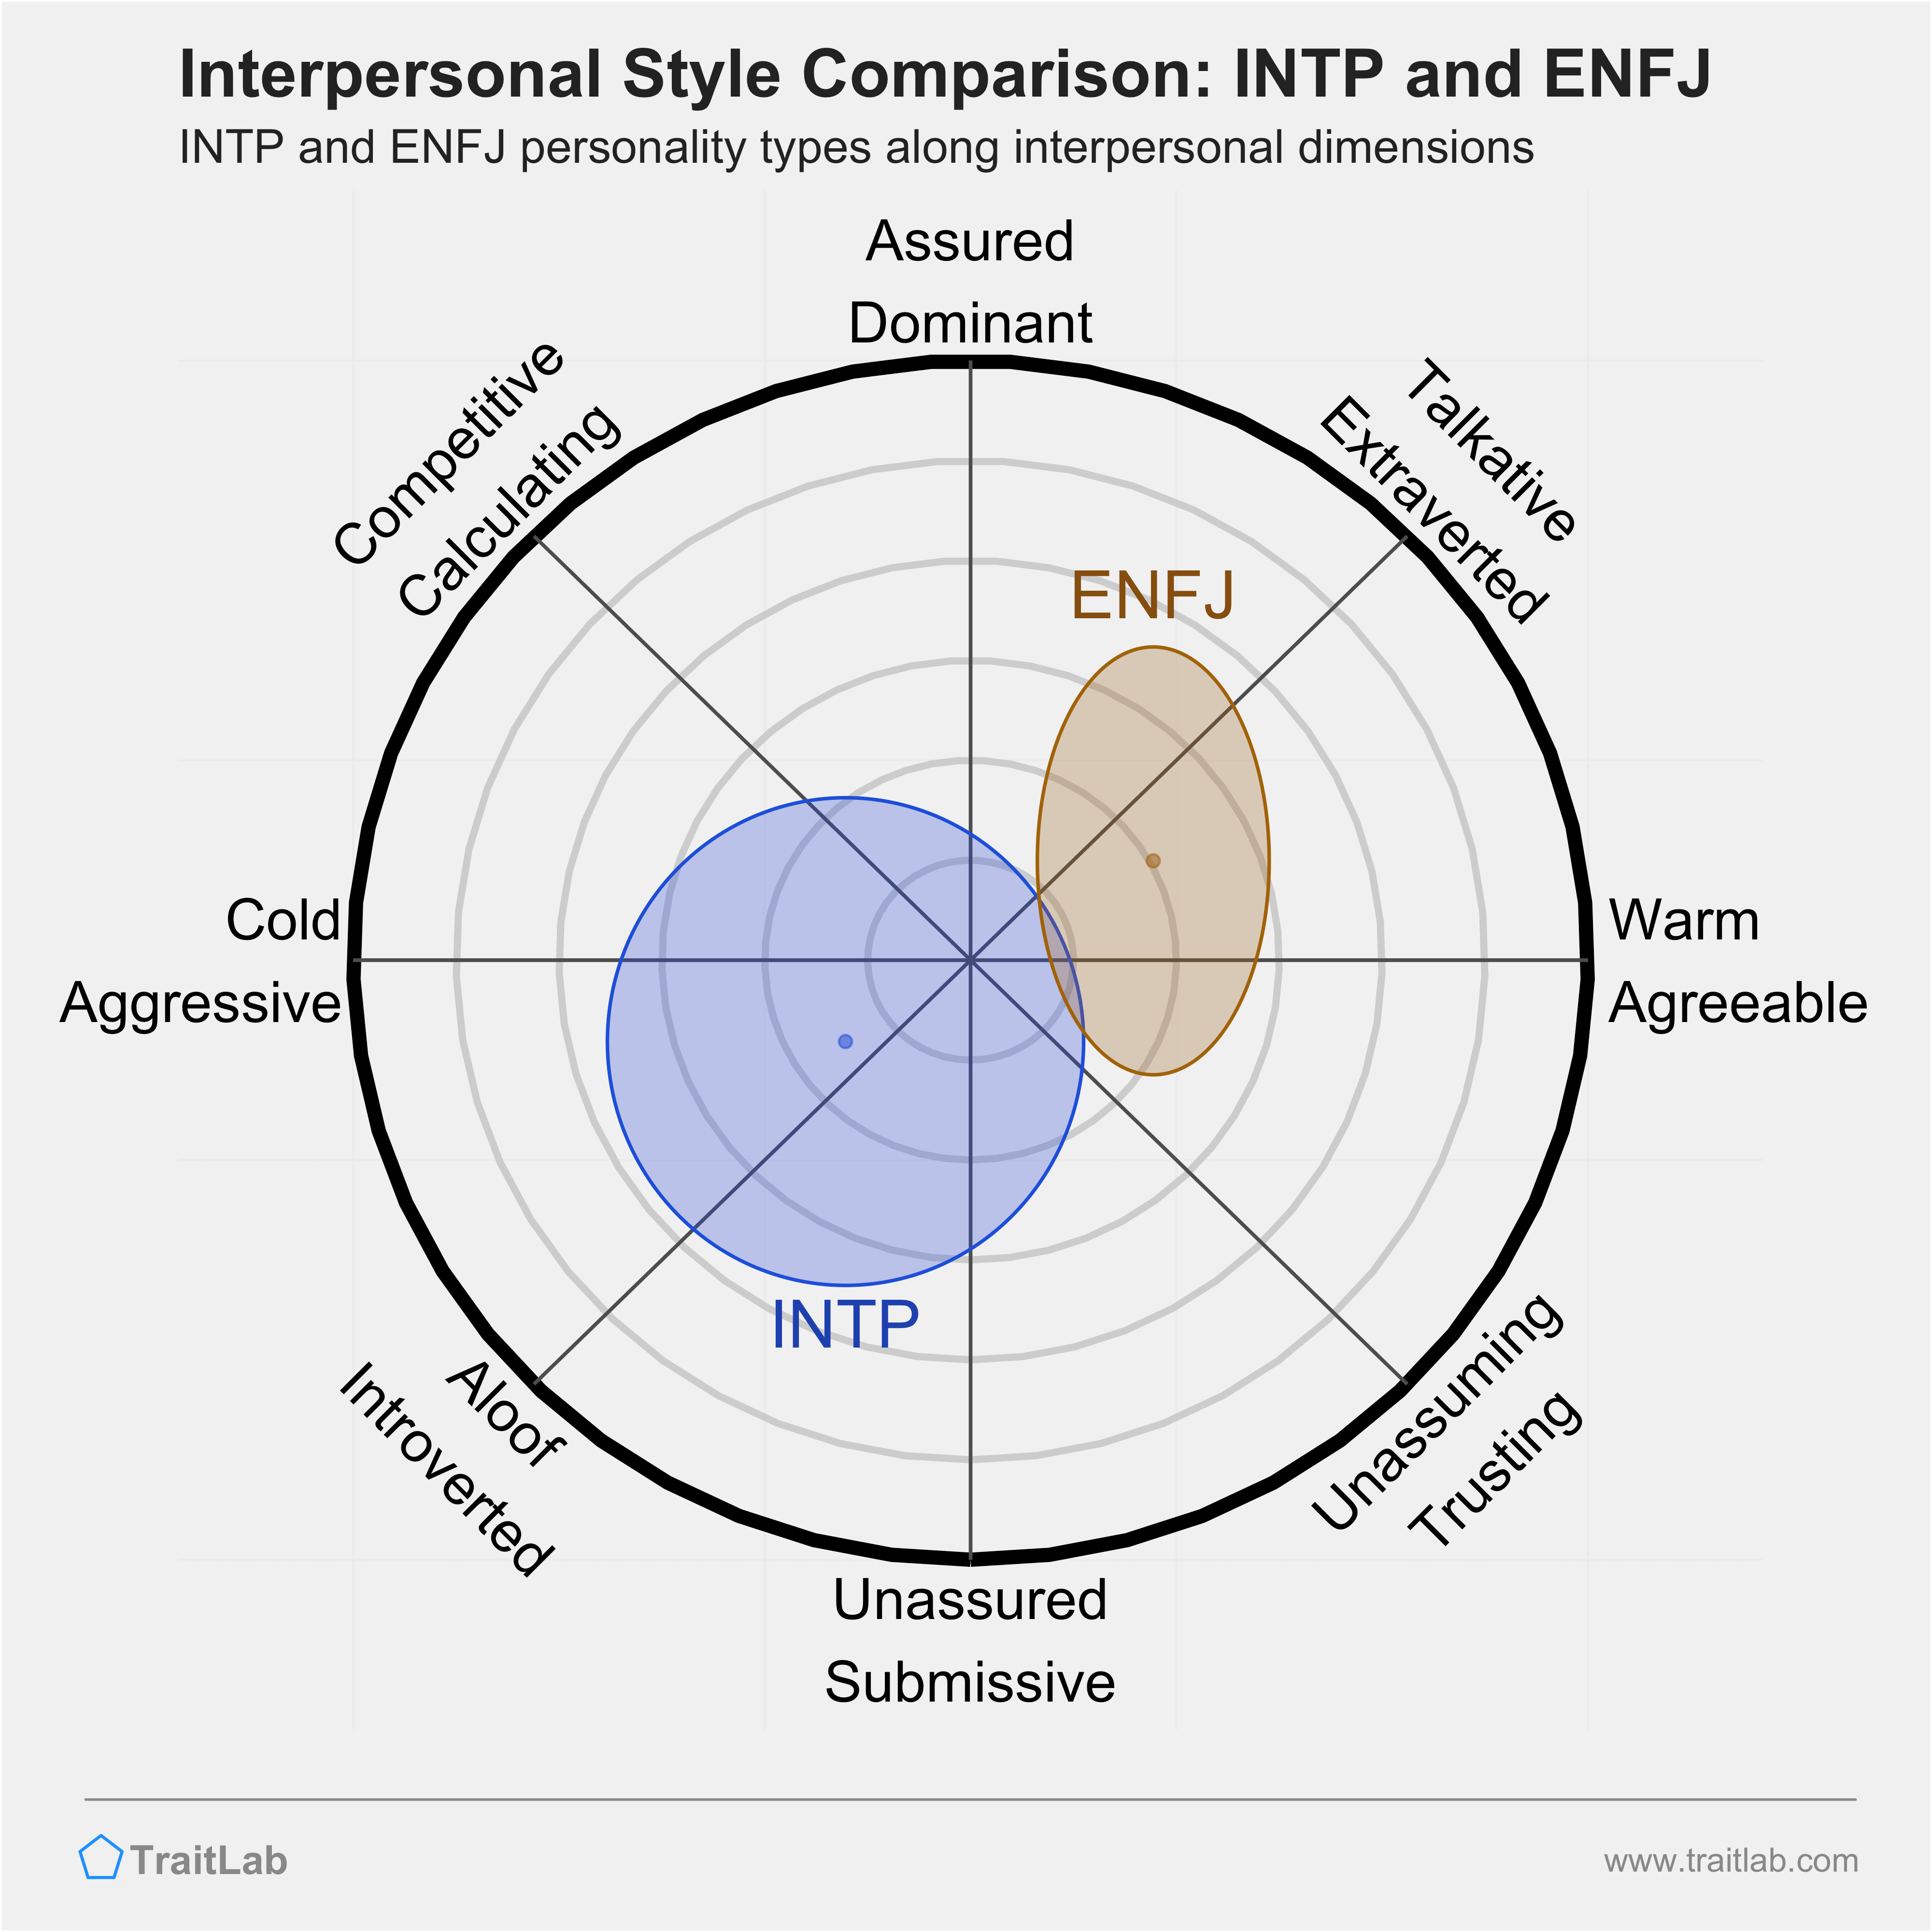 INTP and ENFJ comparison across interpersonal dimensions